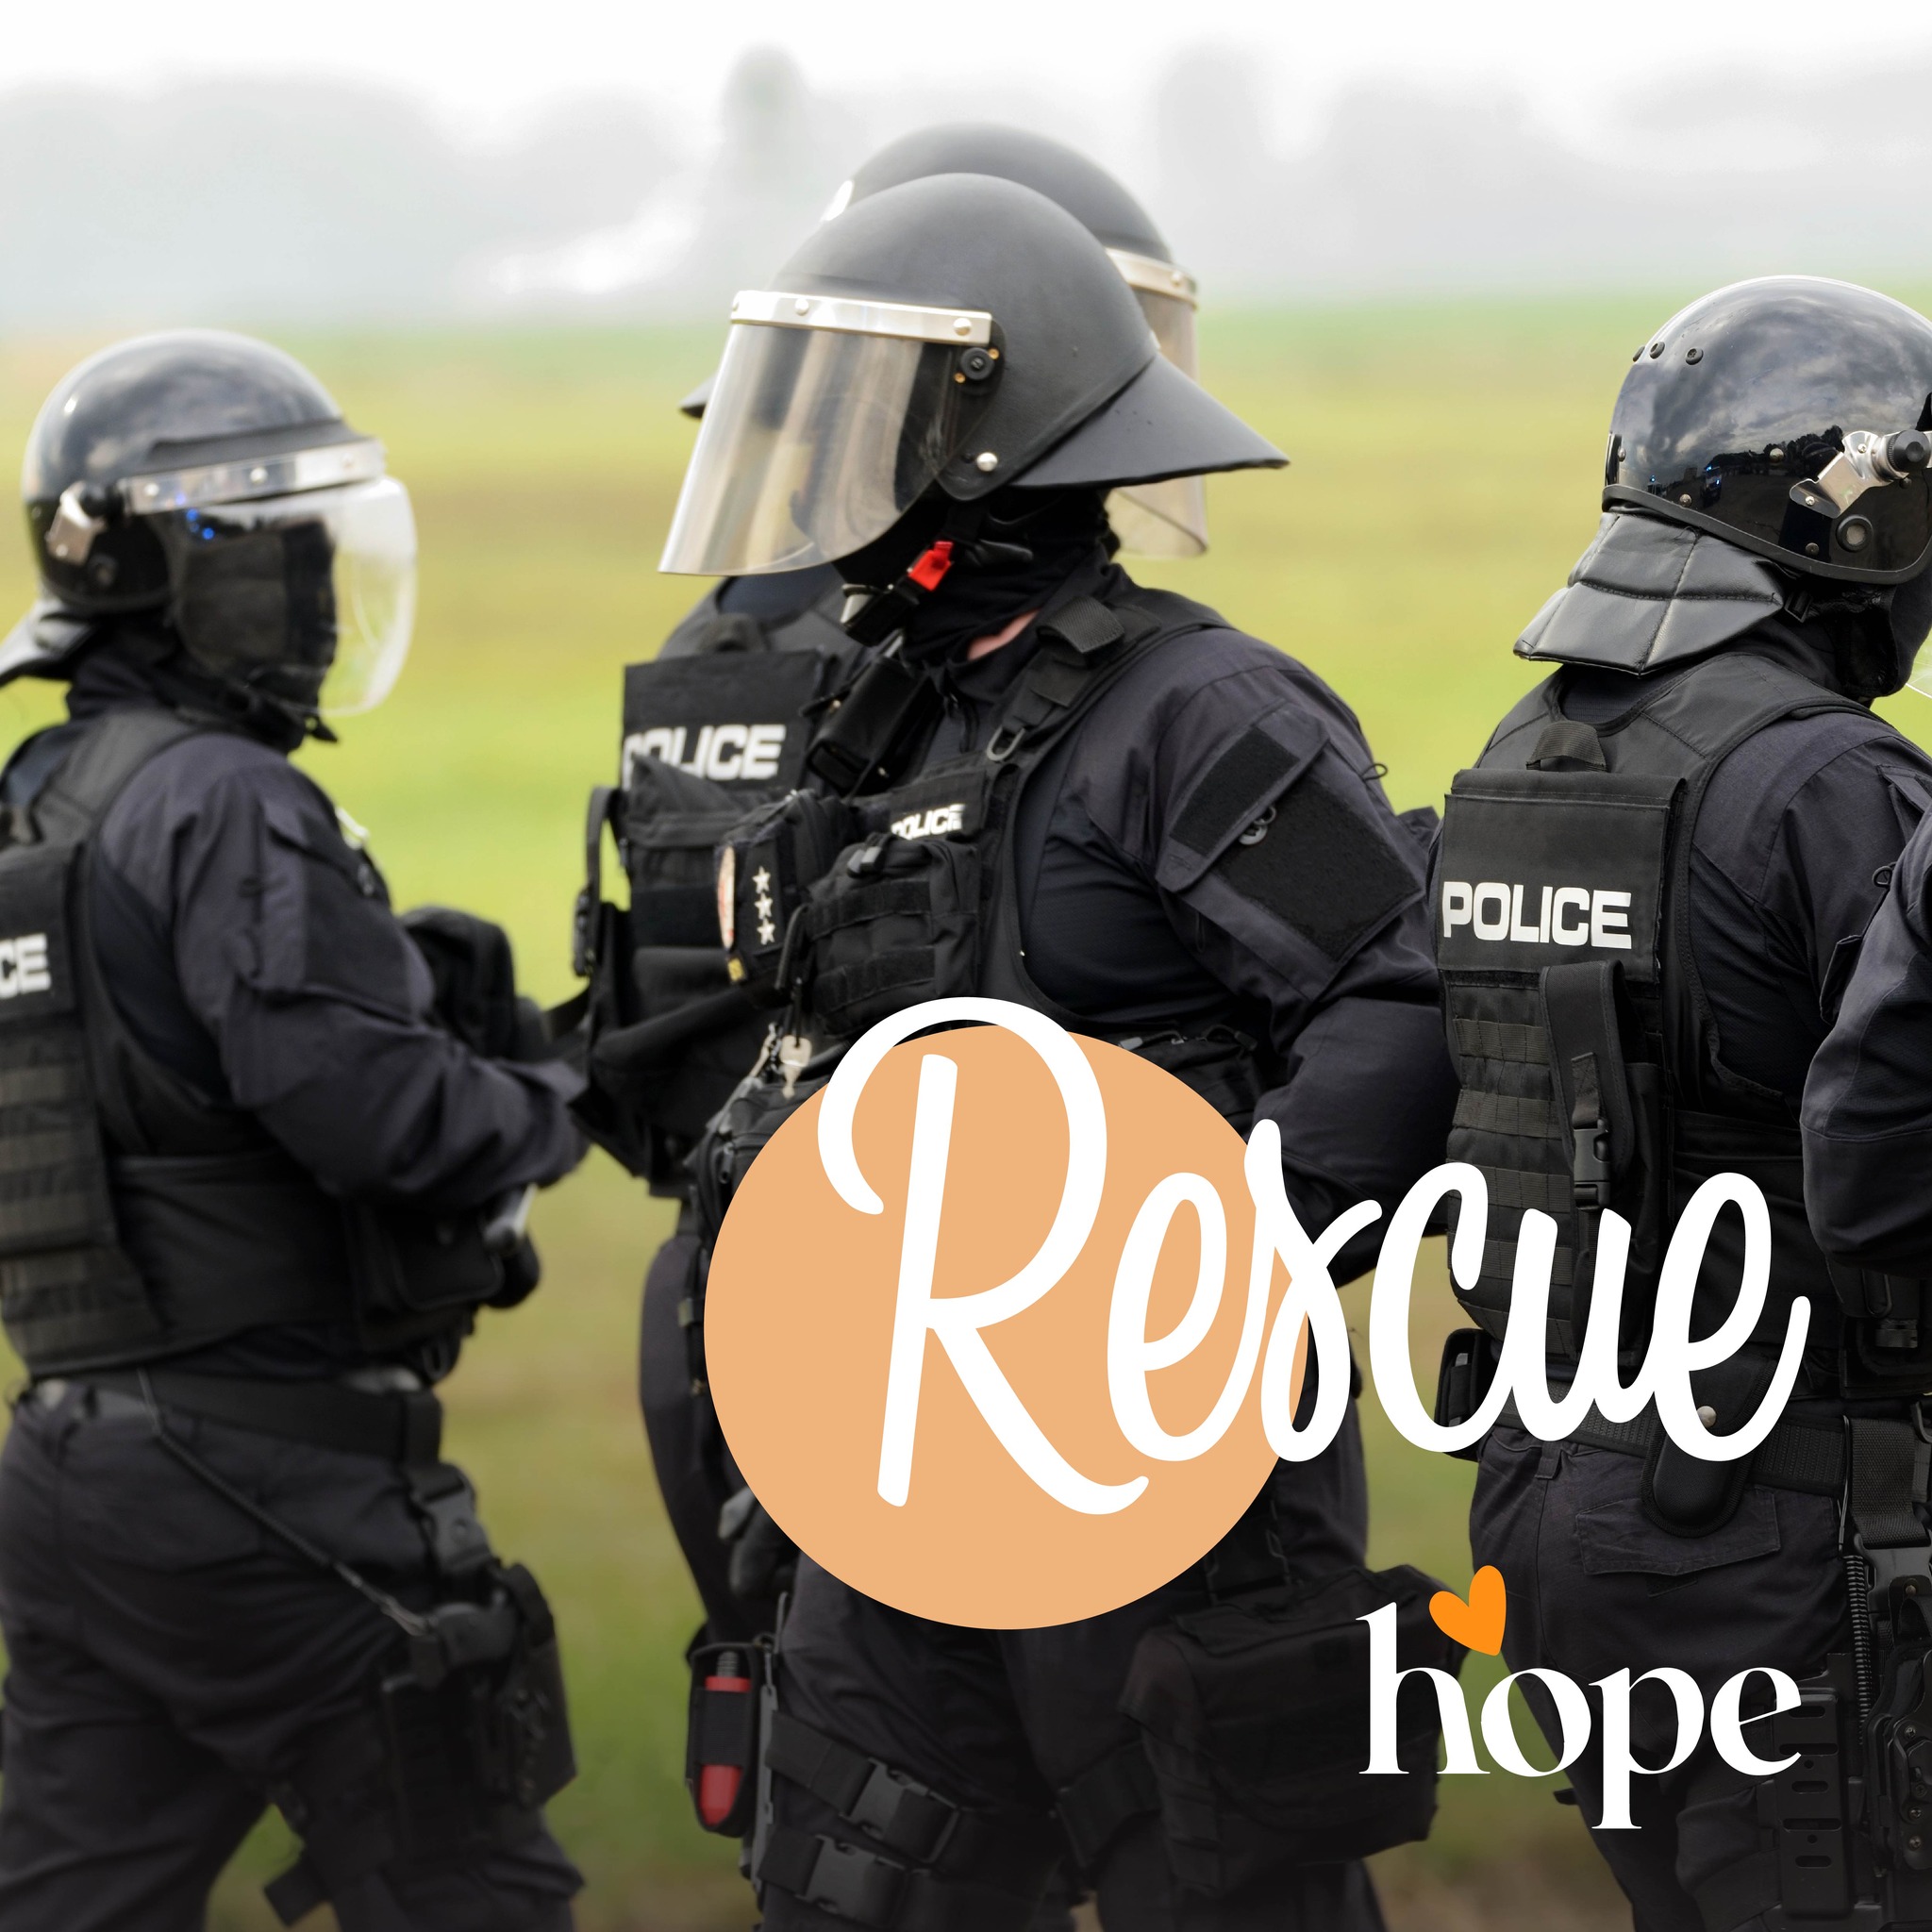 HOPE: Rescue